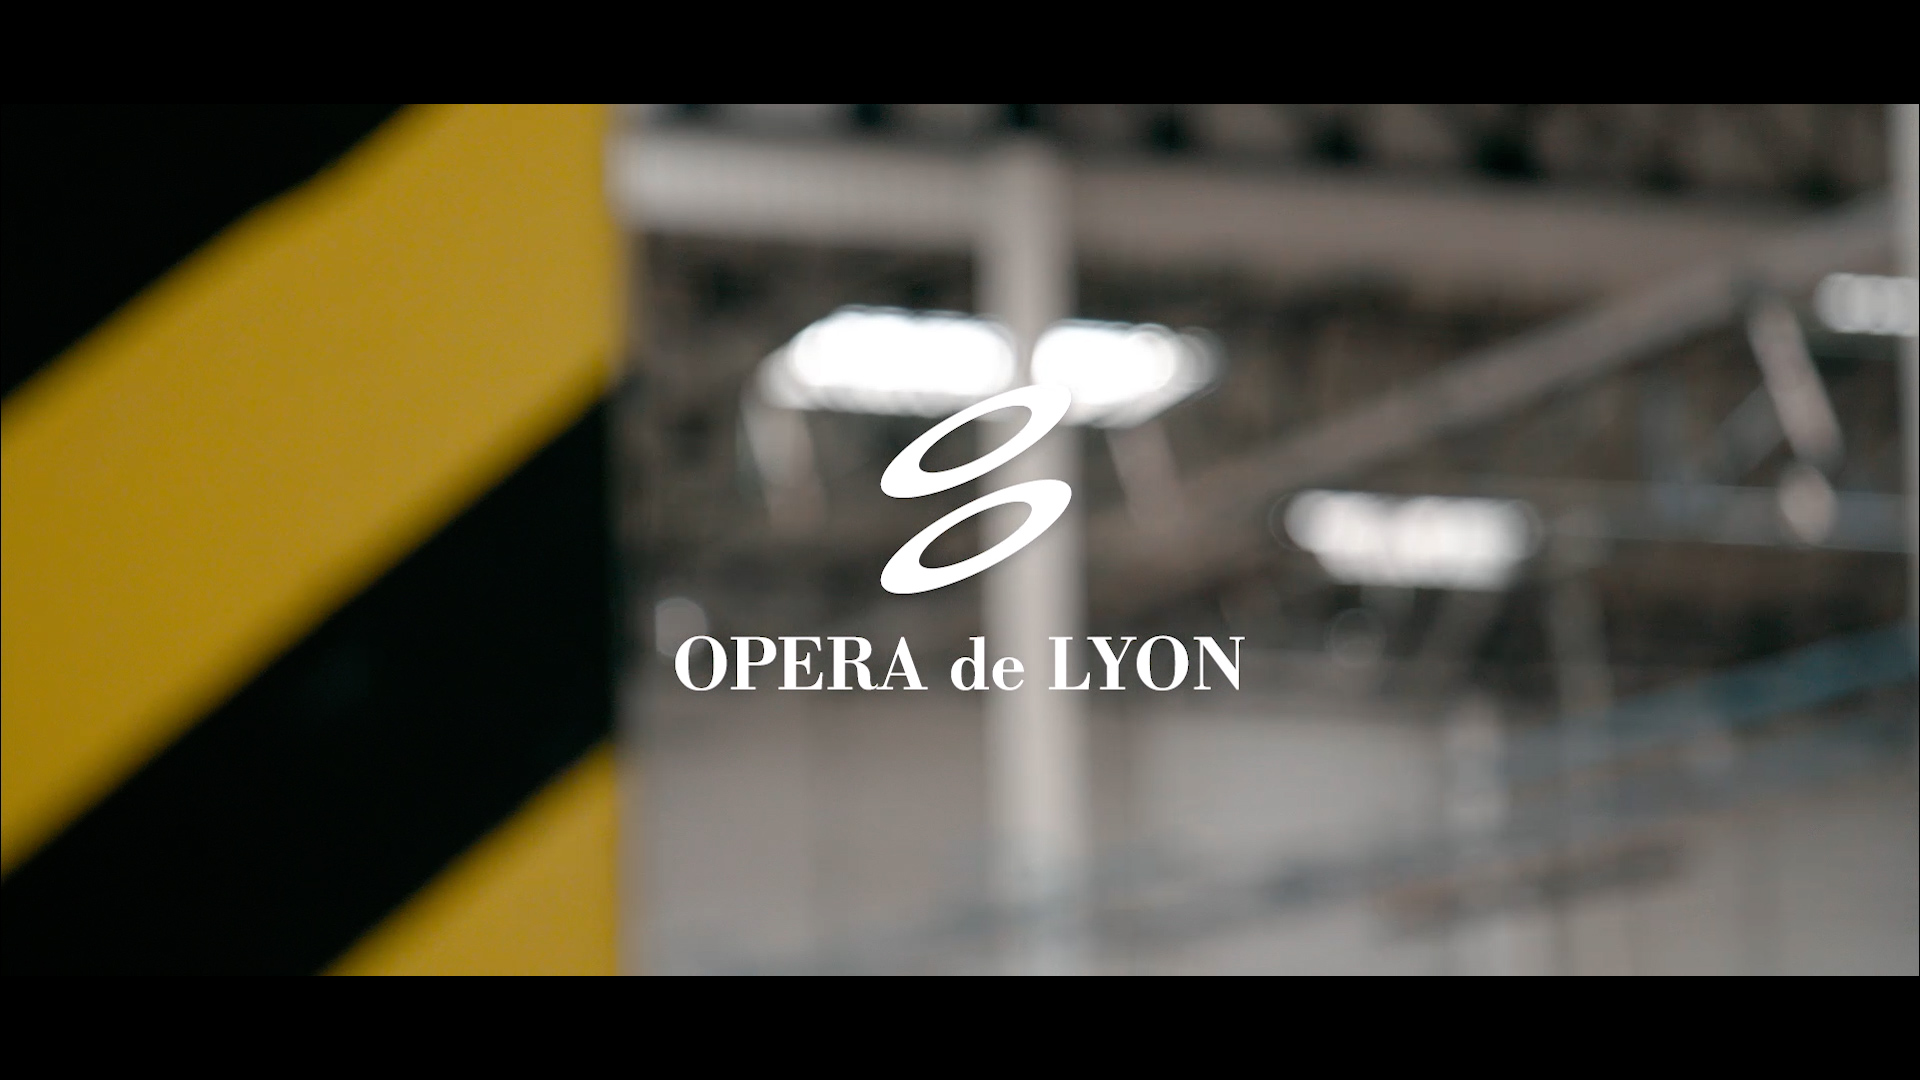 Ballet de l'opéra de Lyon video